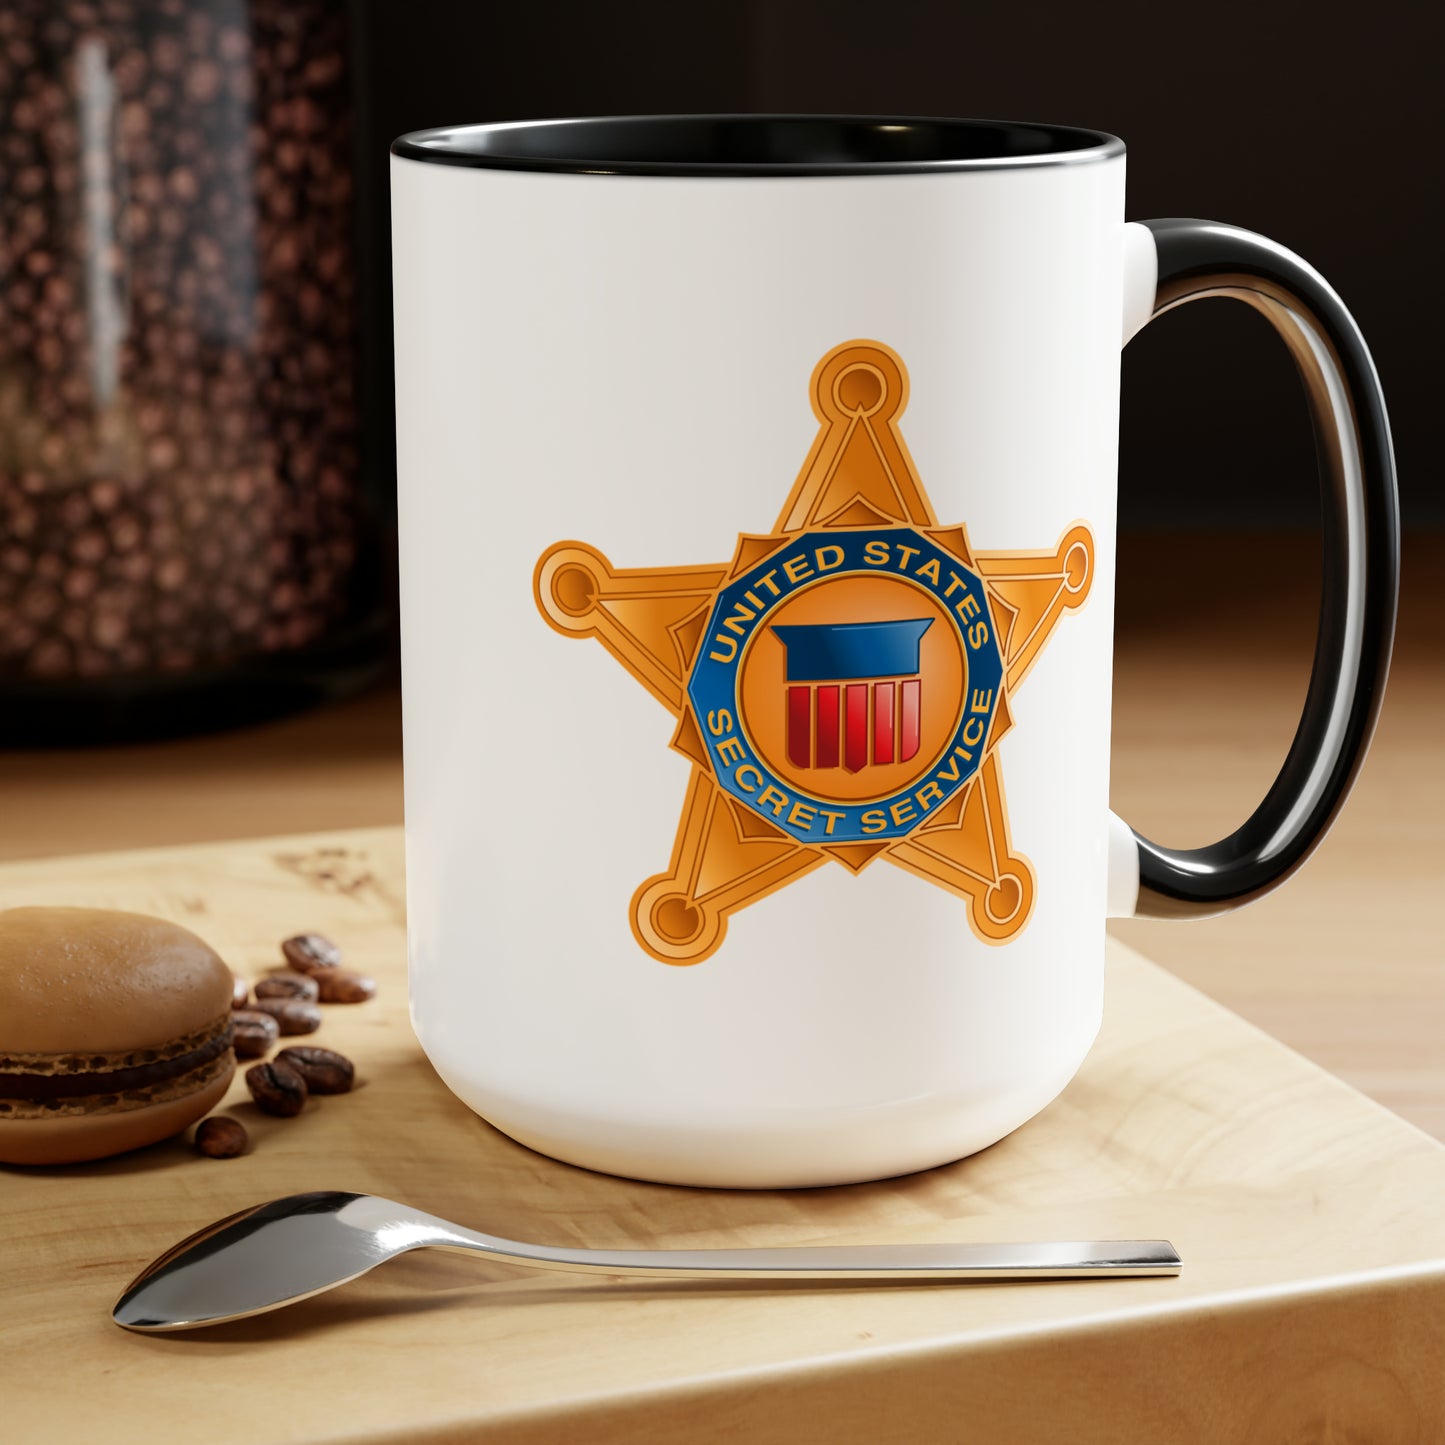 US Secret Service Coffee Mugs - Double Sided Black Accent White Ceramic 15oz by TheGlassyLass